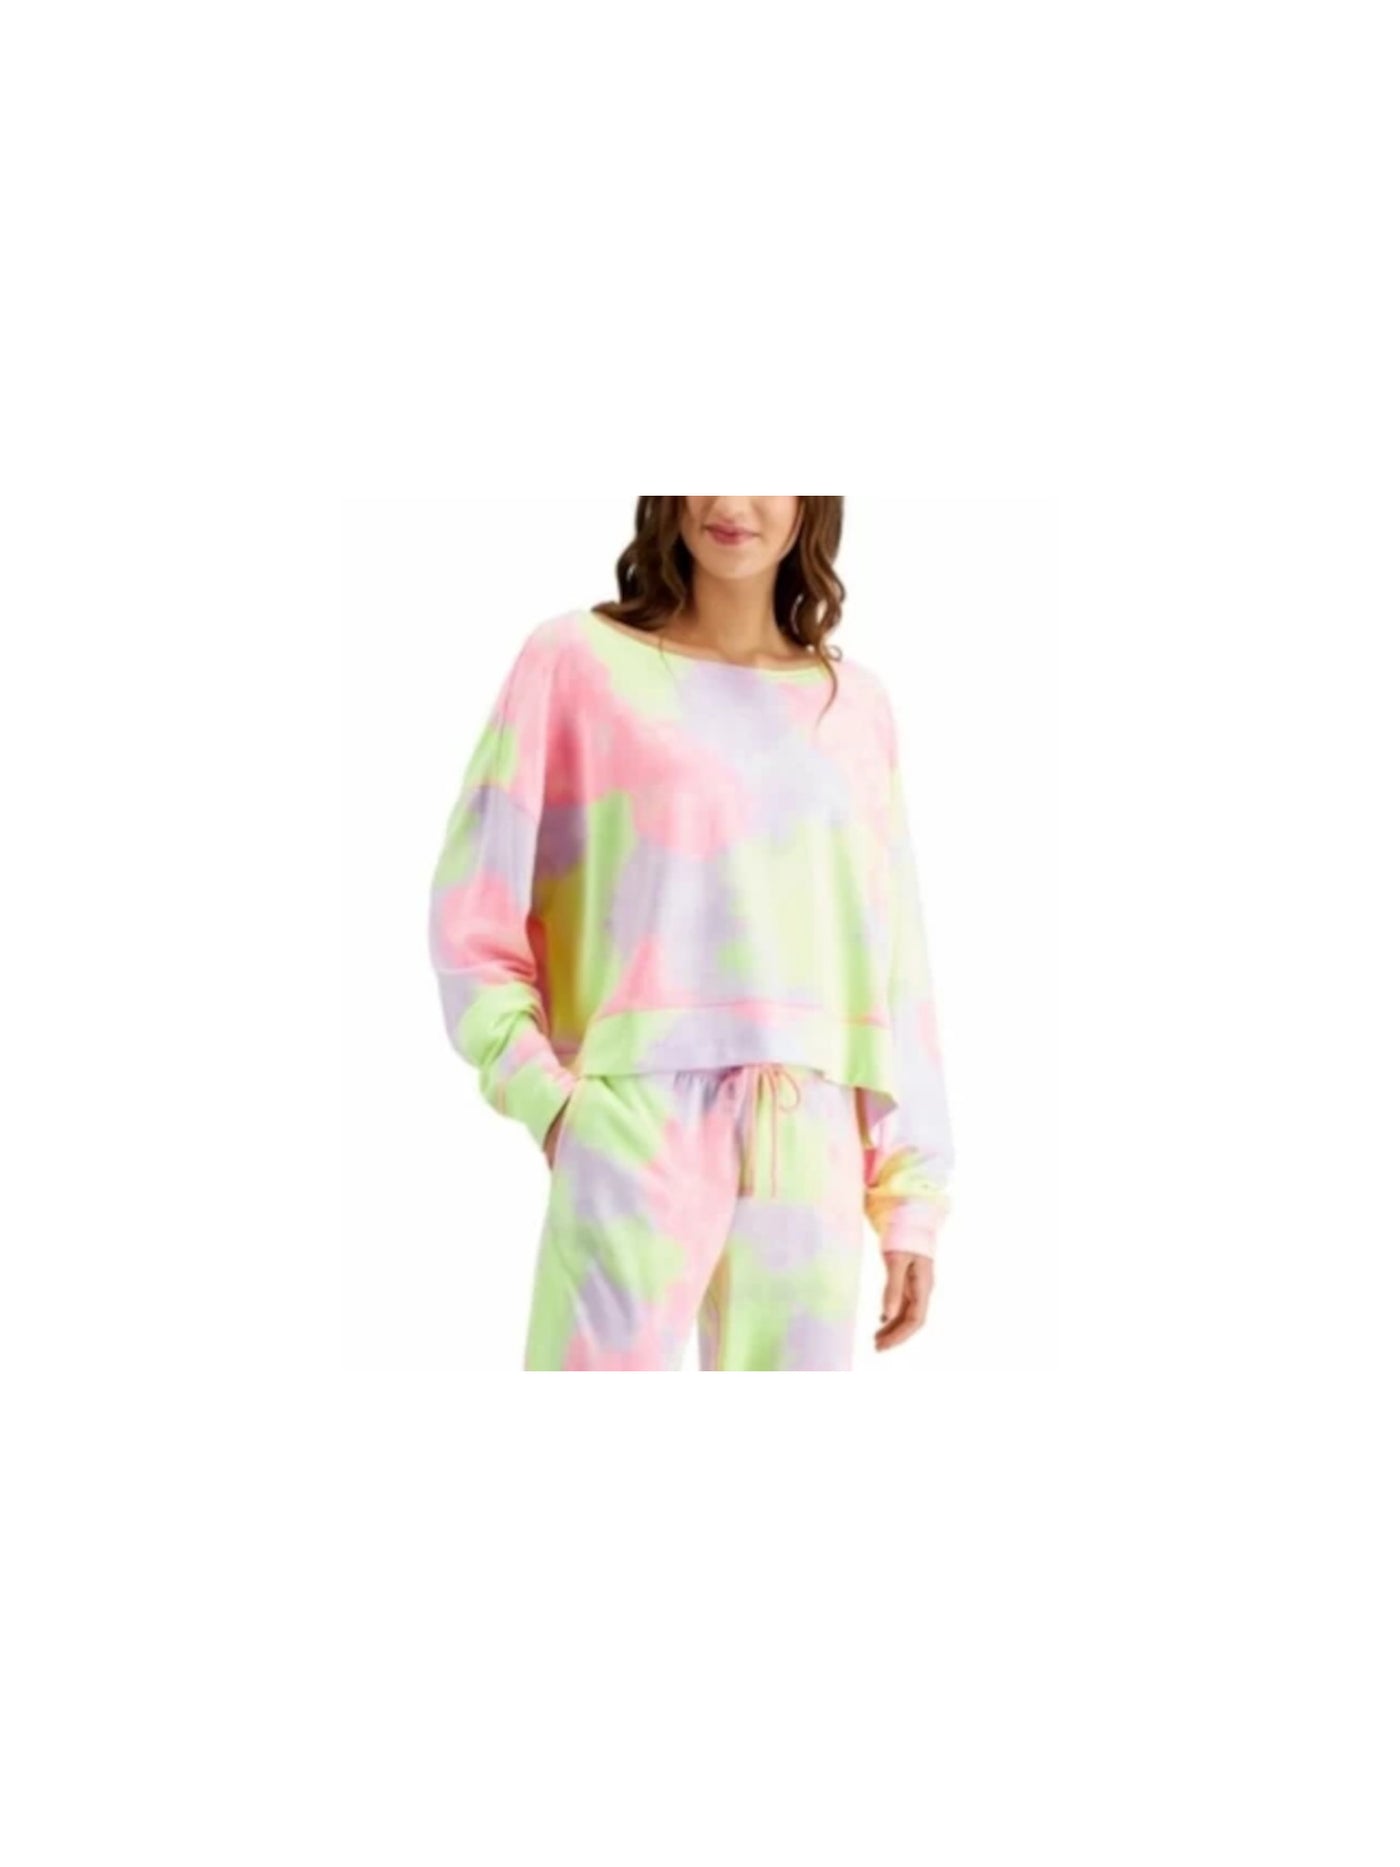 JENNI Intimates Pink Crewneck Cropped Sweatshirt Sleep Shirt Pajama Top S